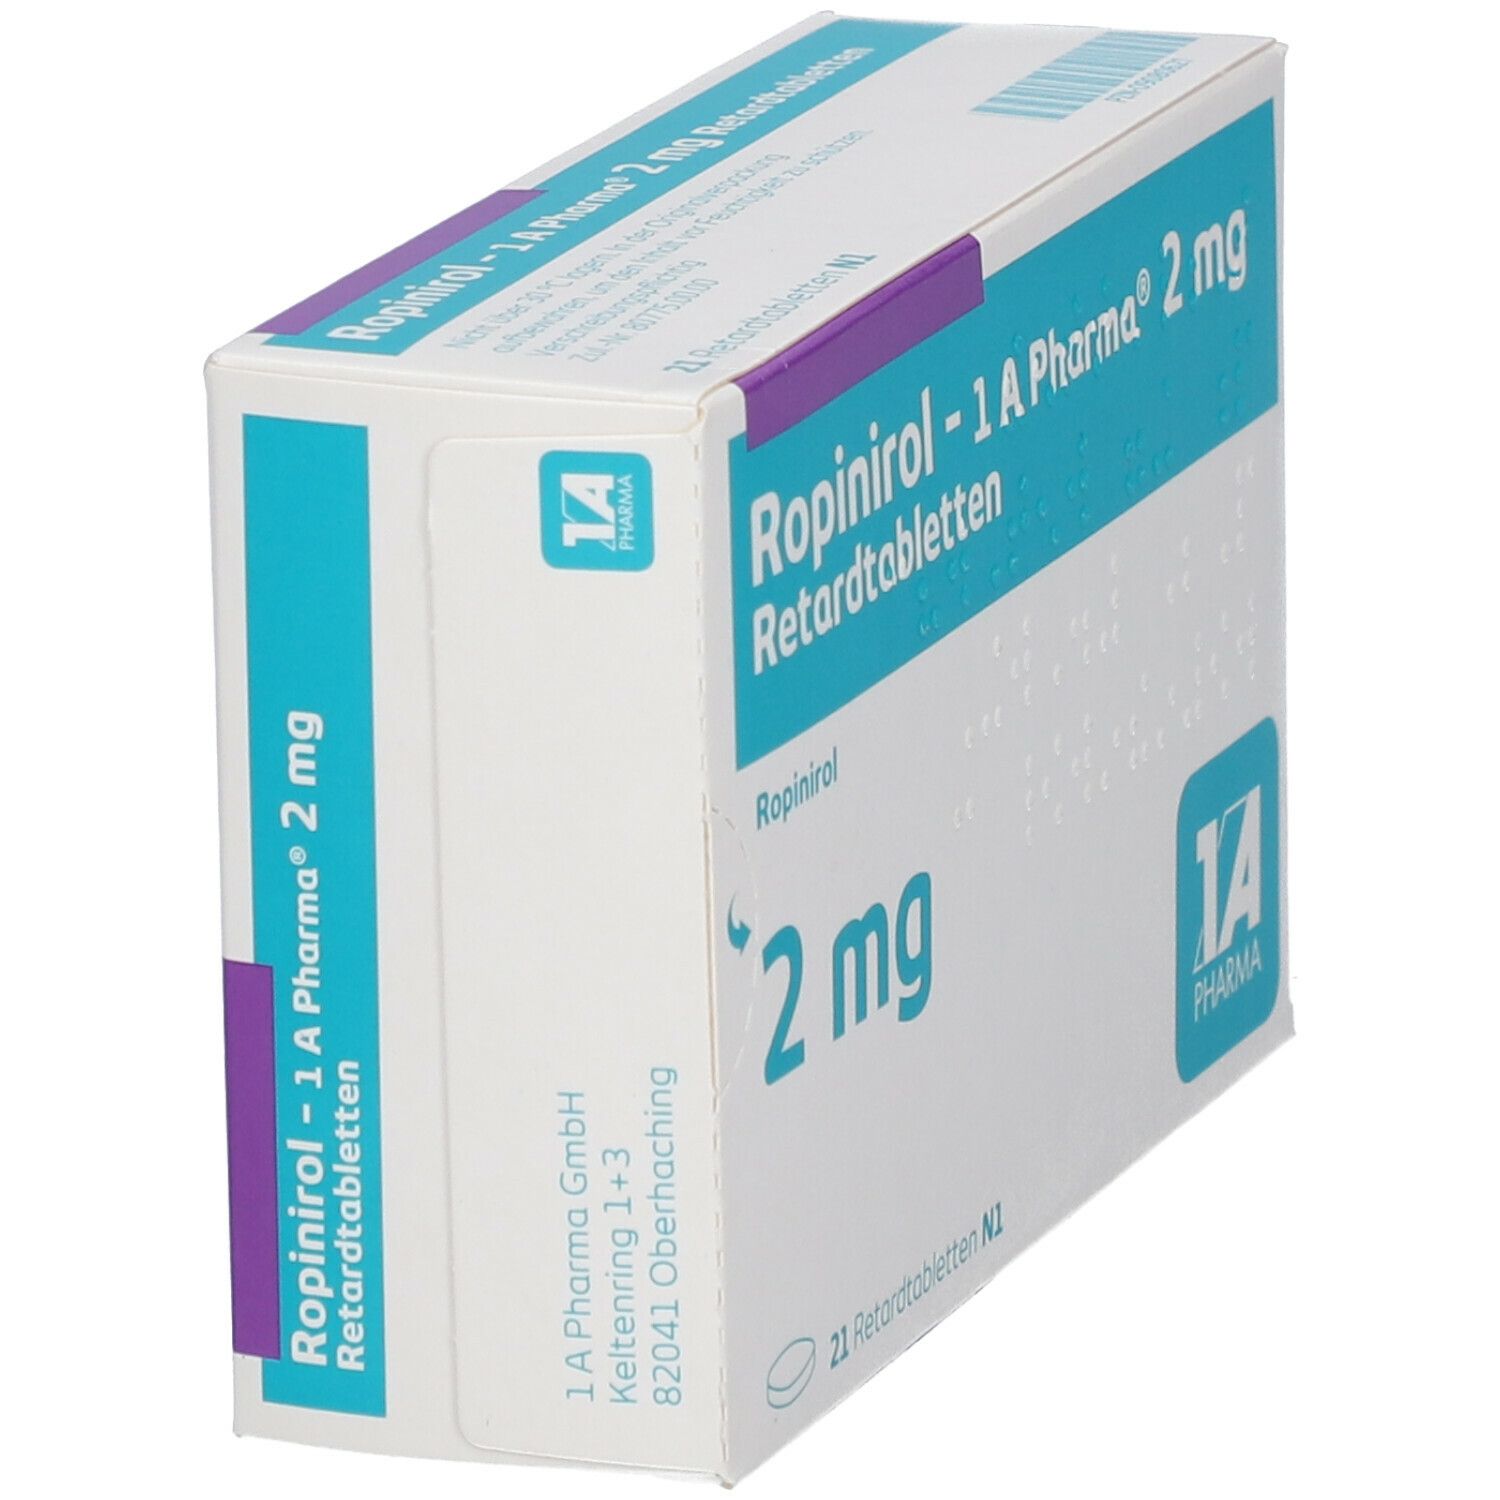 Ropinirol - 1 A Pharma® 2 mg Retardtabletten